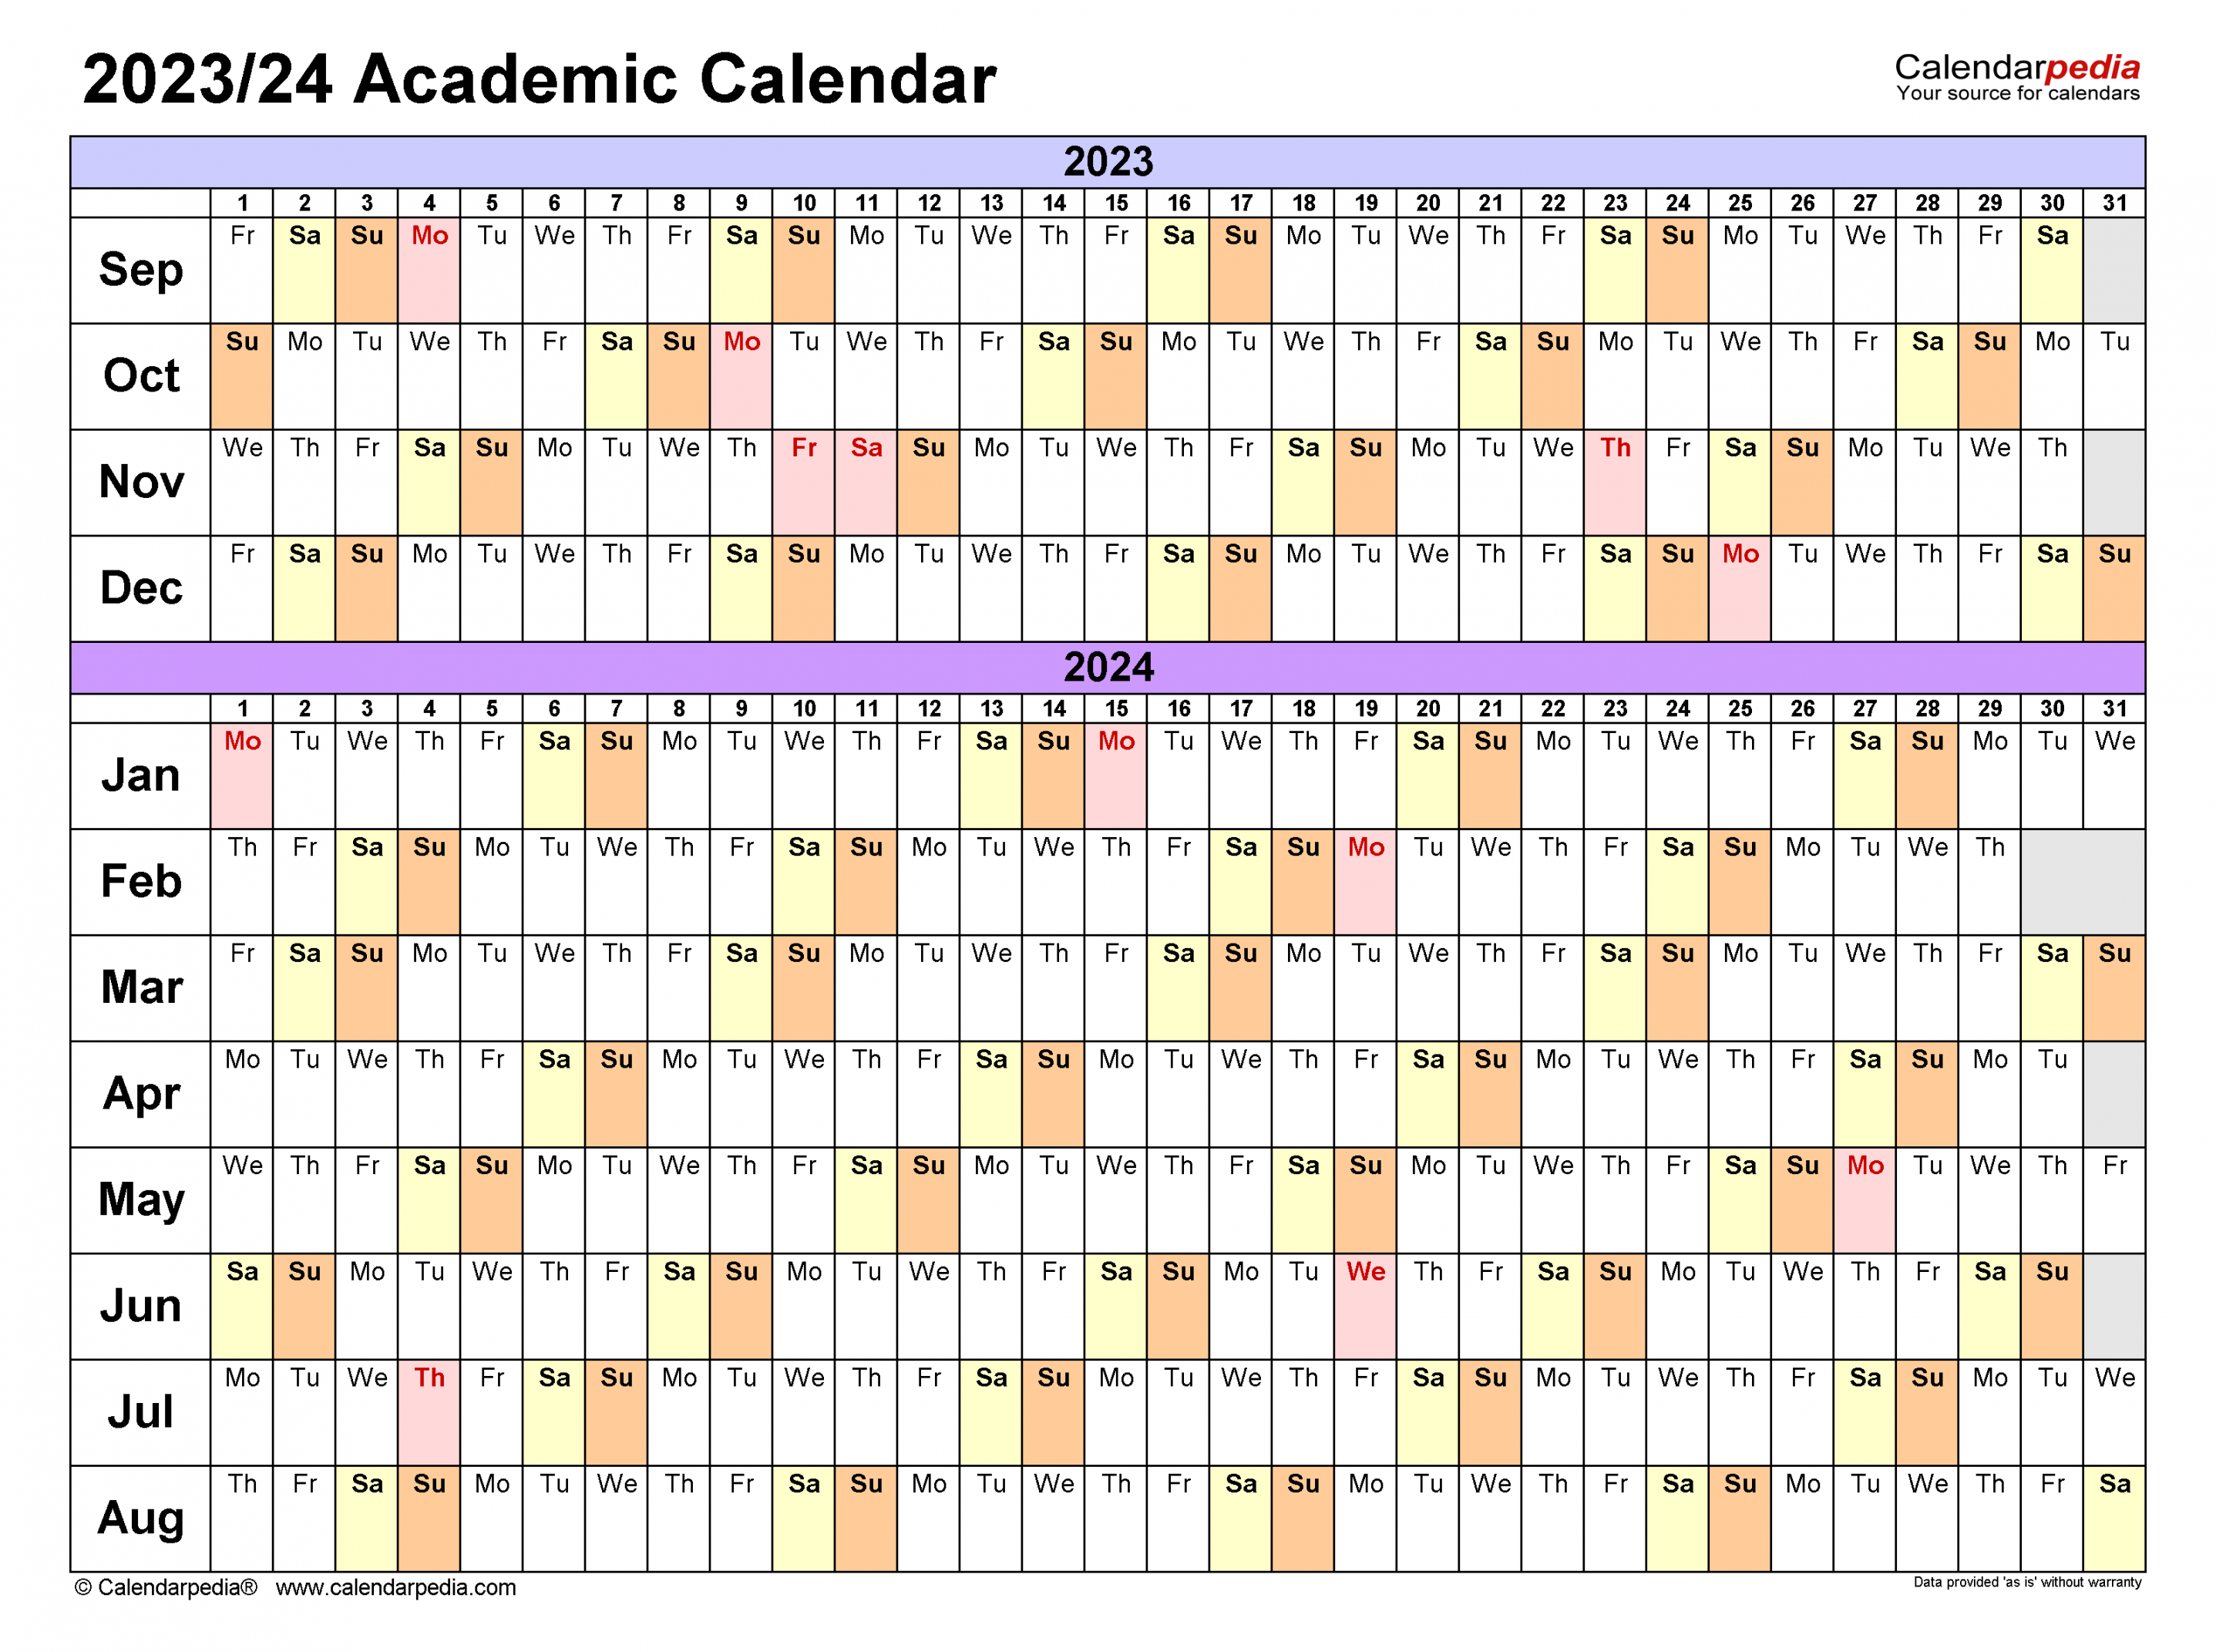 Suffolk Community College Academic Calendar